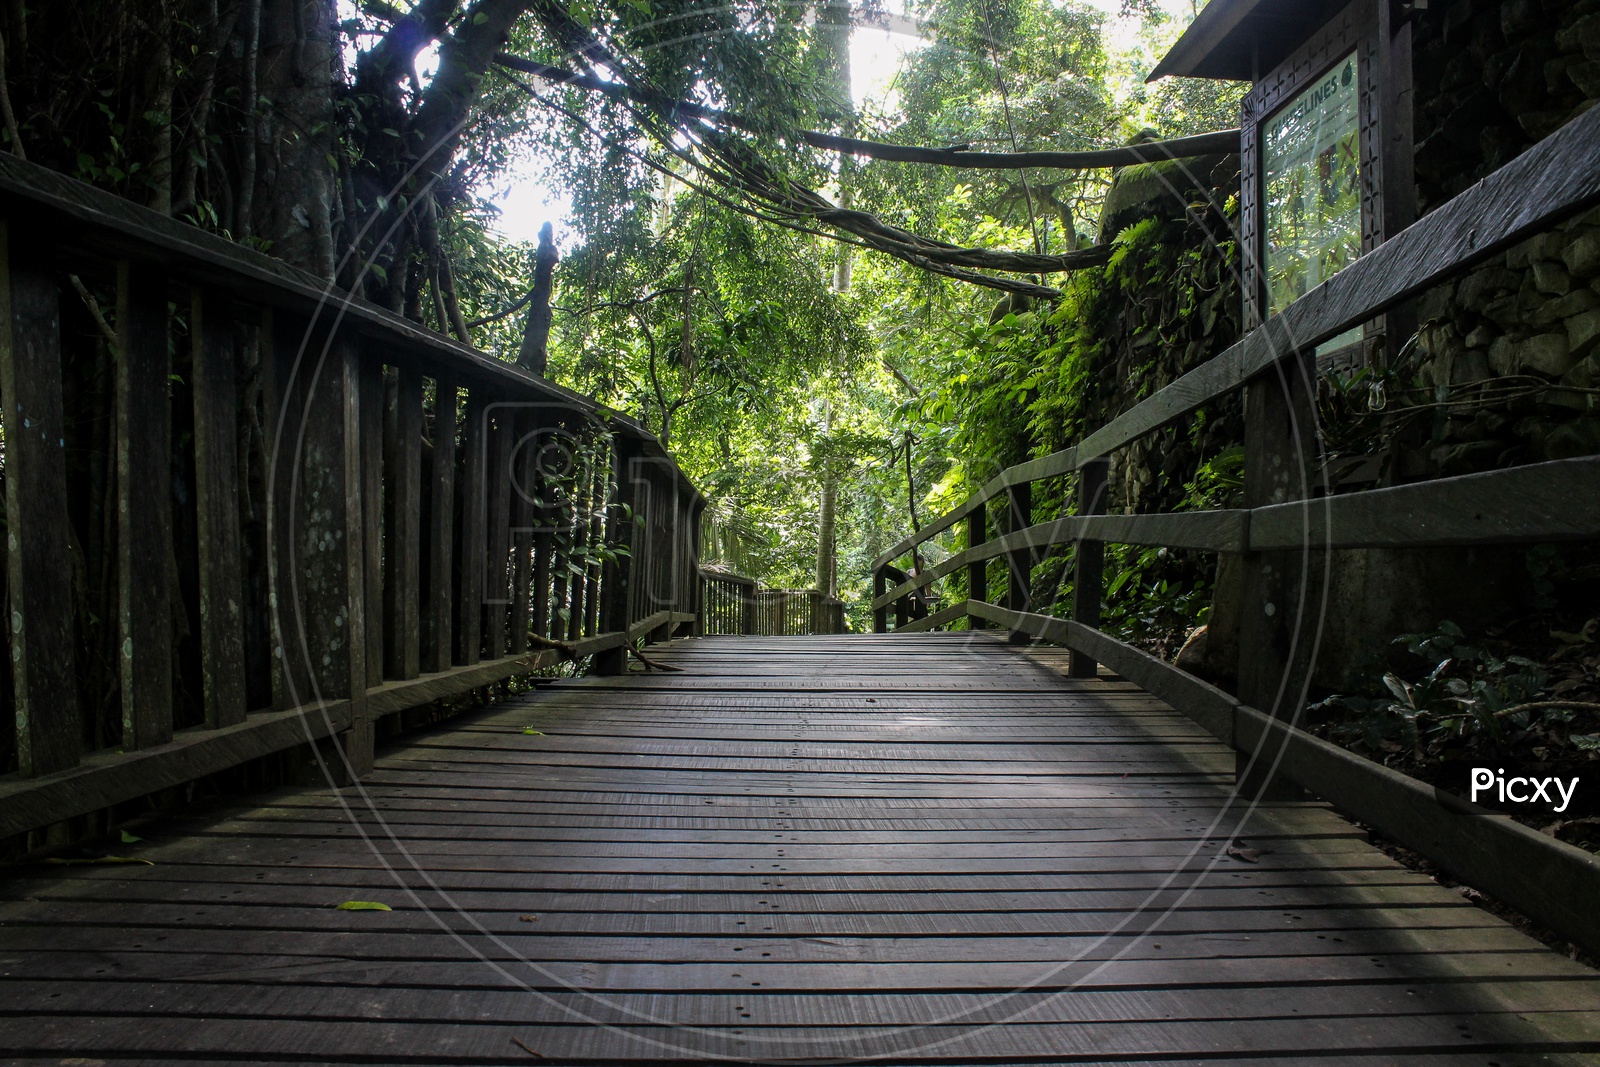 A Wooden Bridge as a Pathway